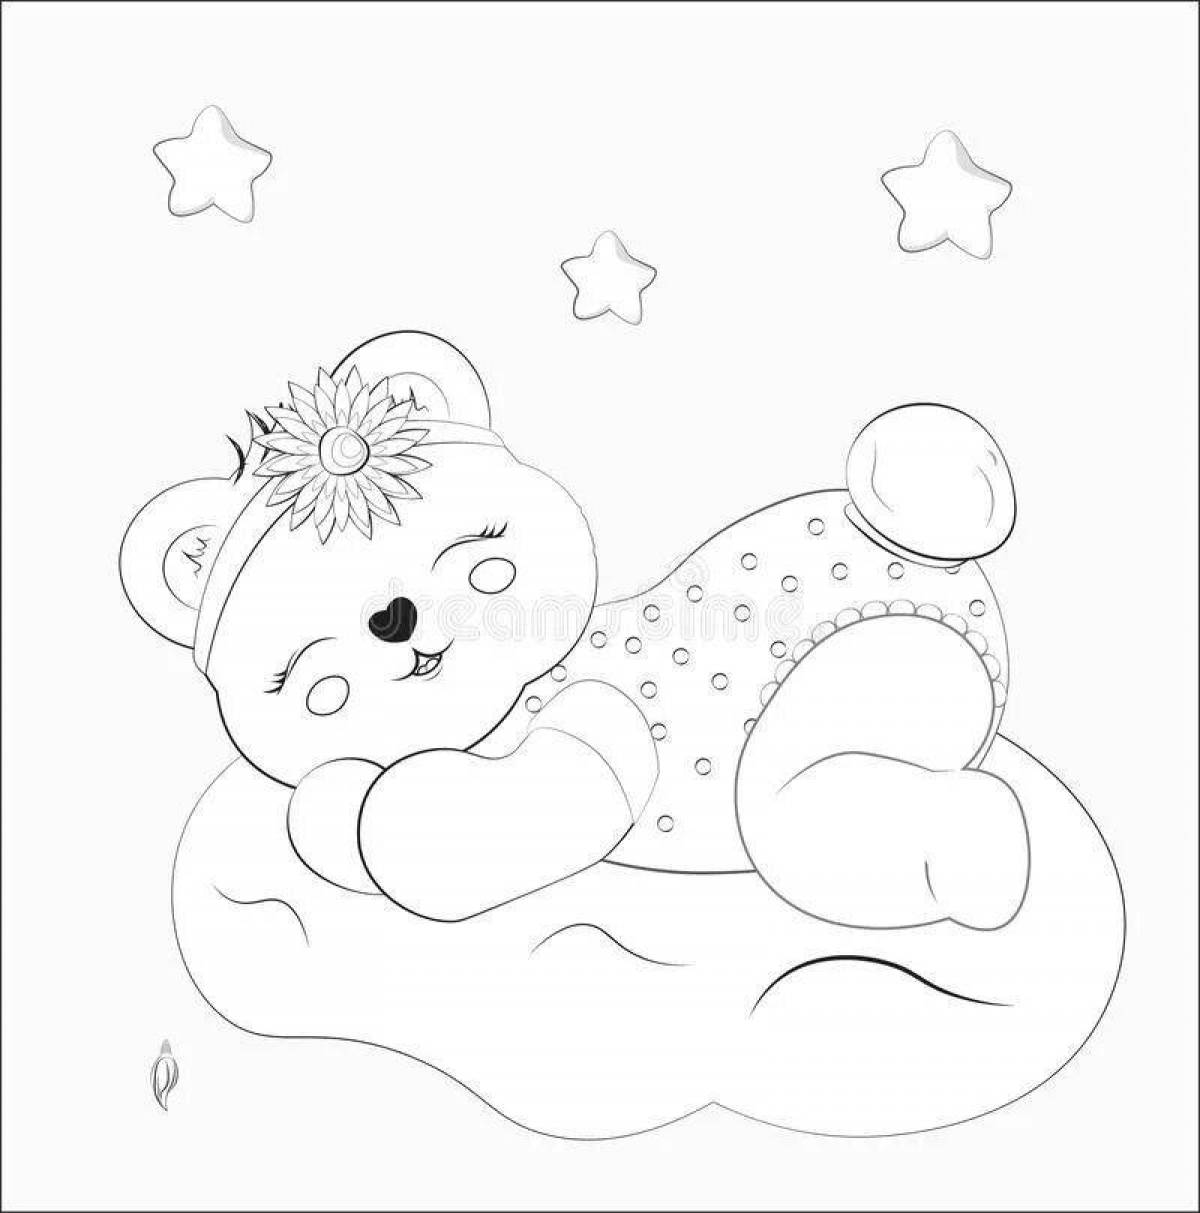 Coloring book playful teddy bear sleeping